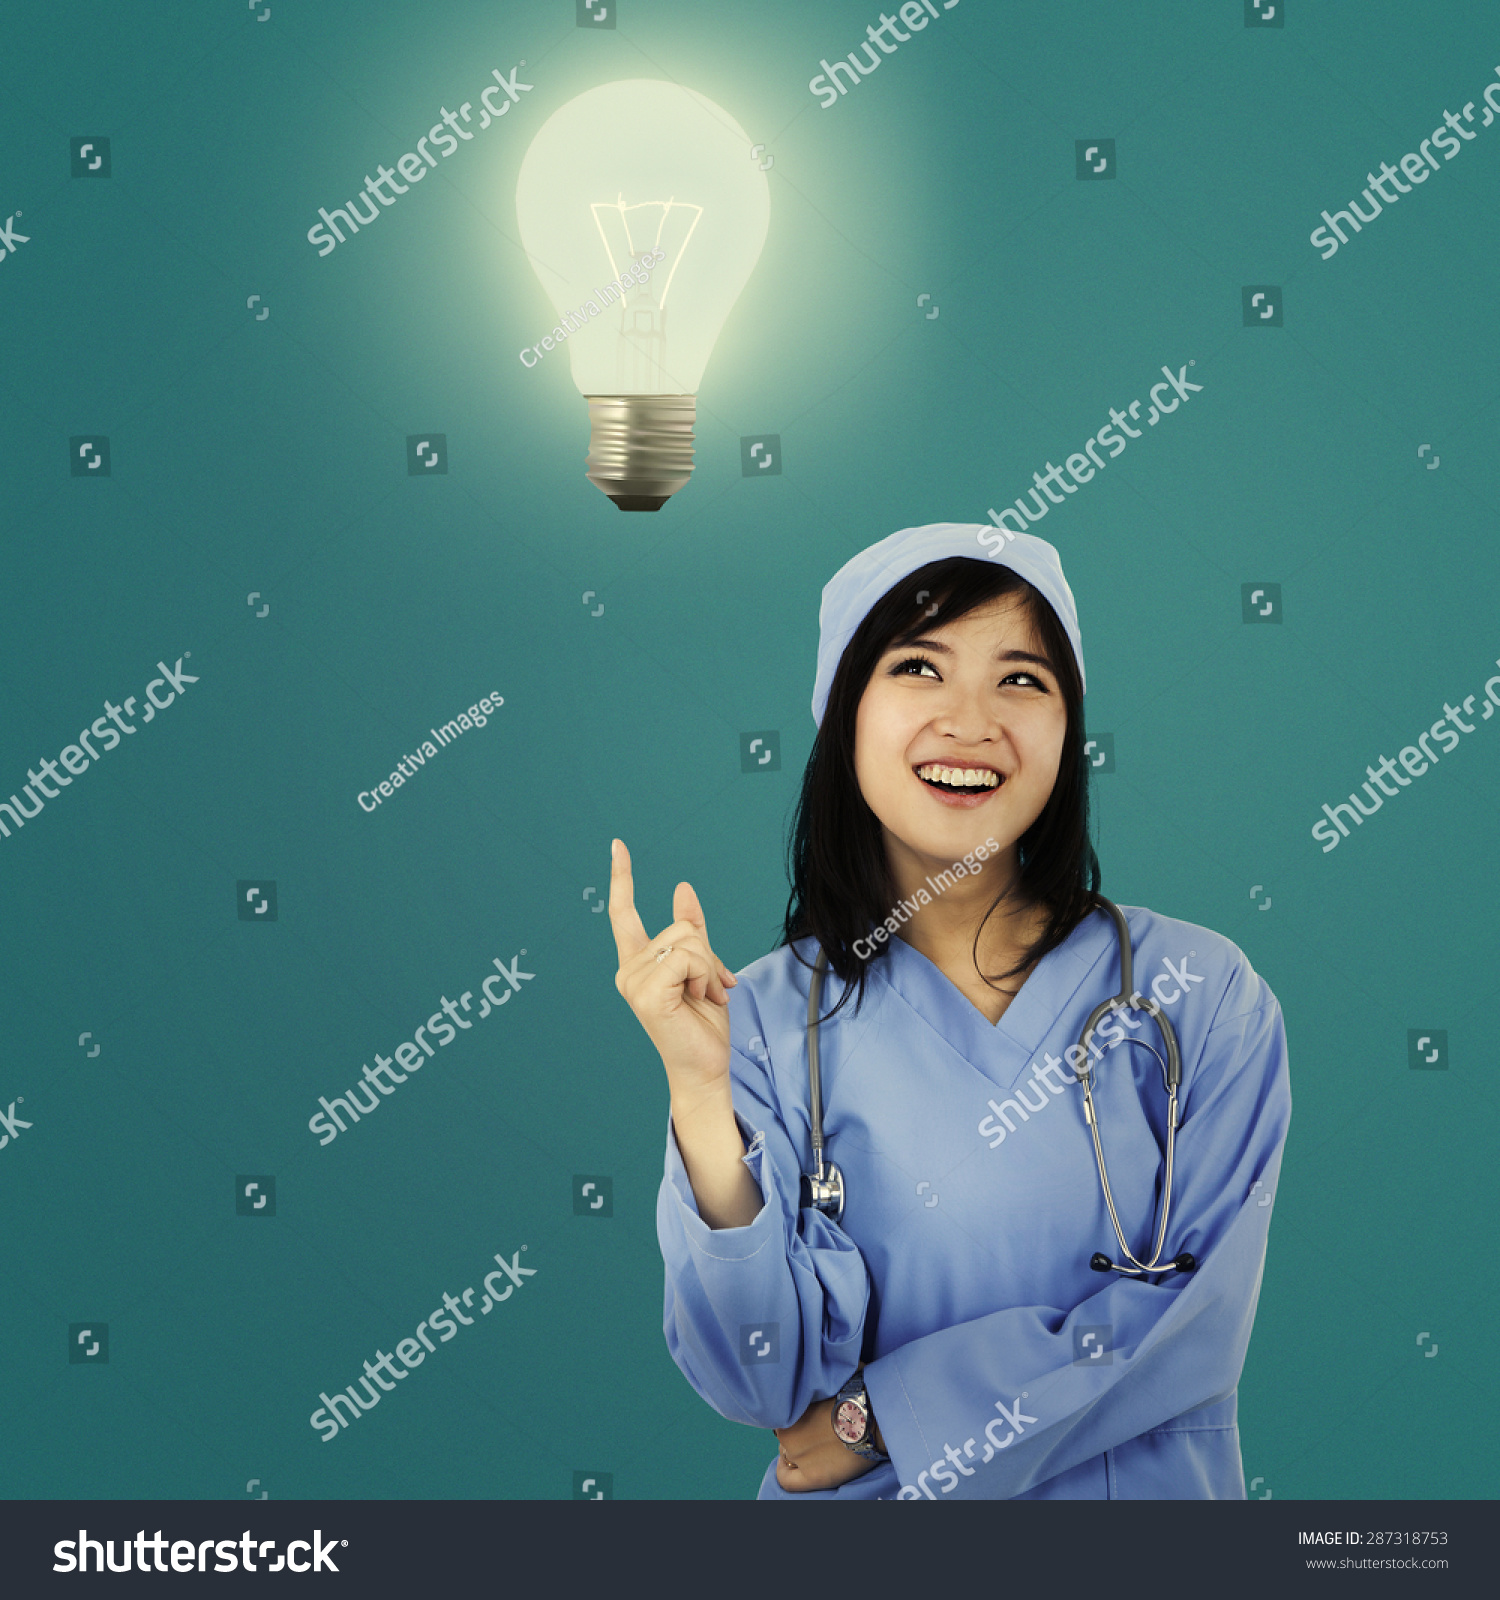 Female Surgeon Getting Idea Pointing Bright Stock Photo 287318753 ...